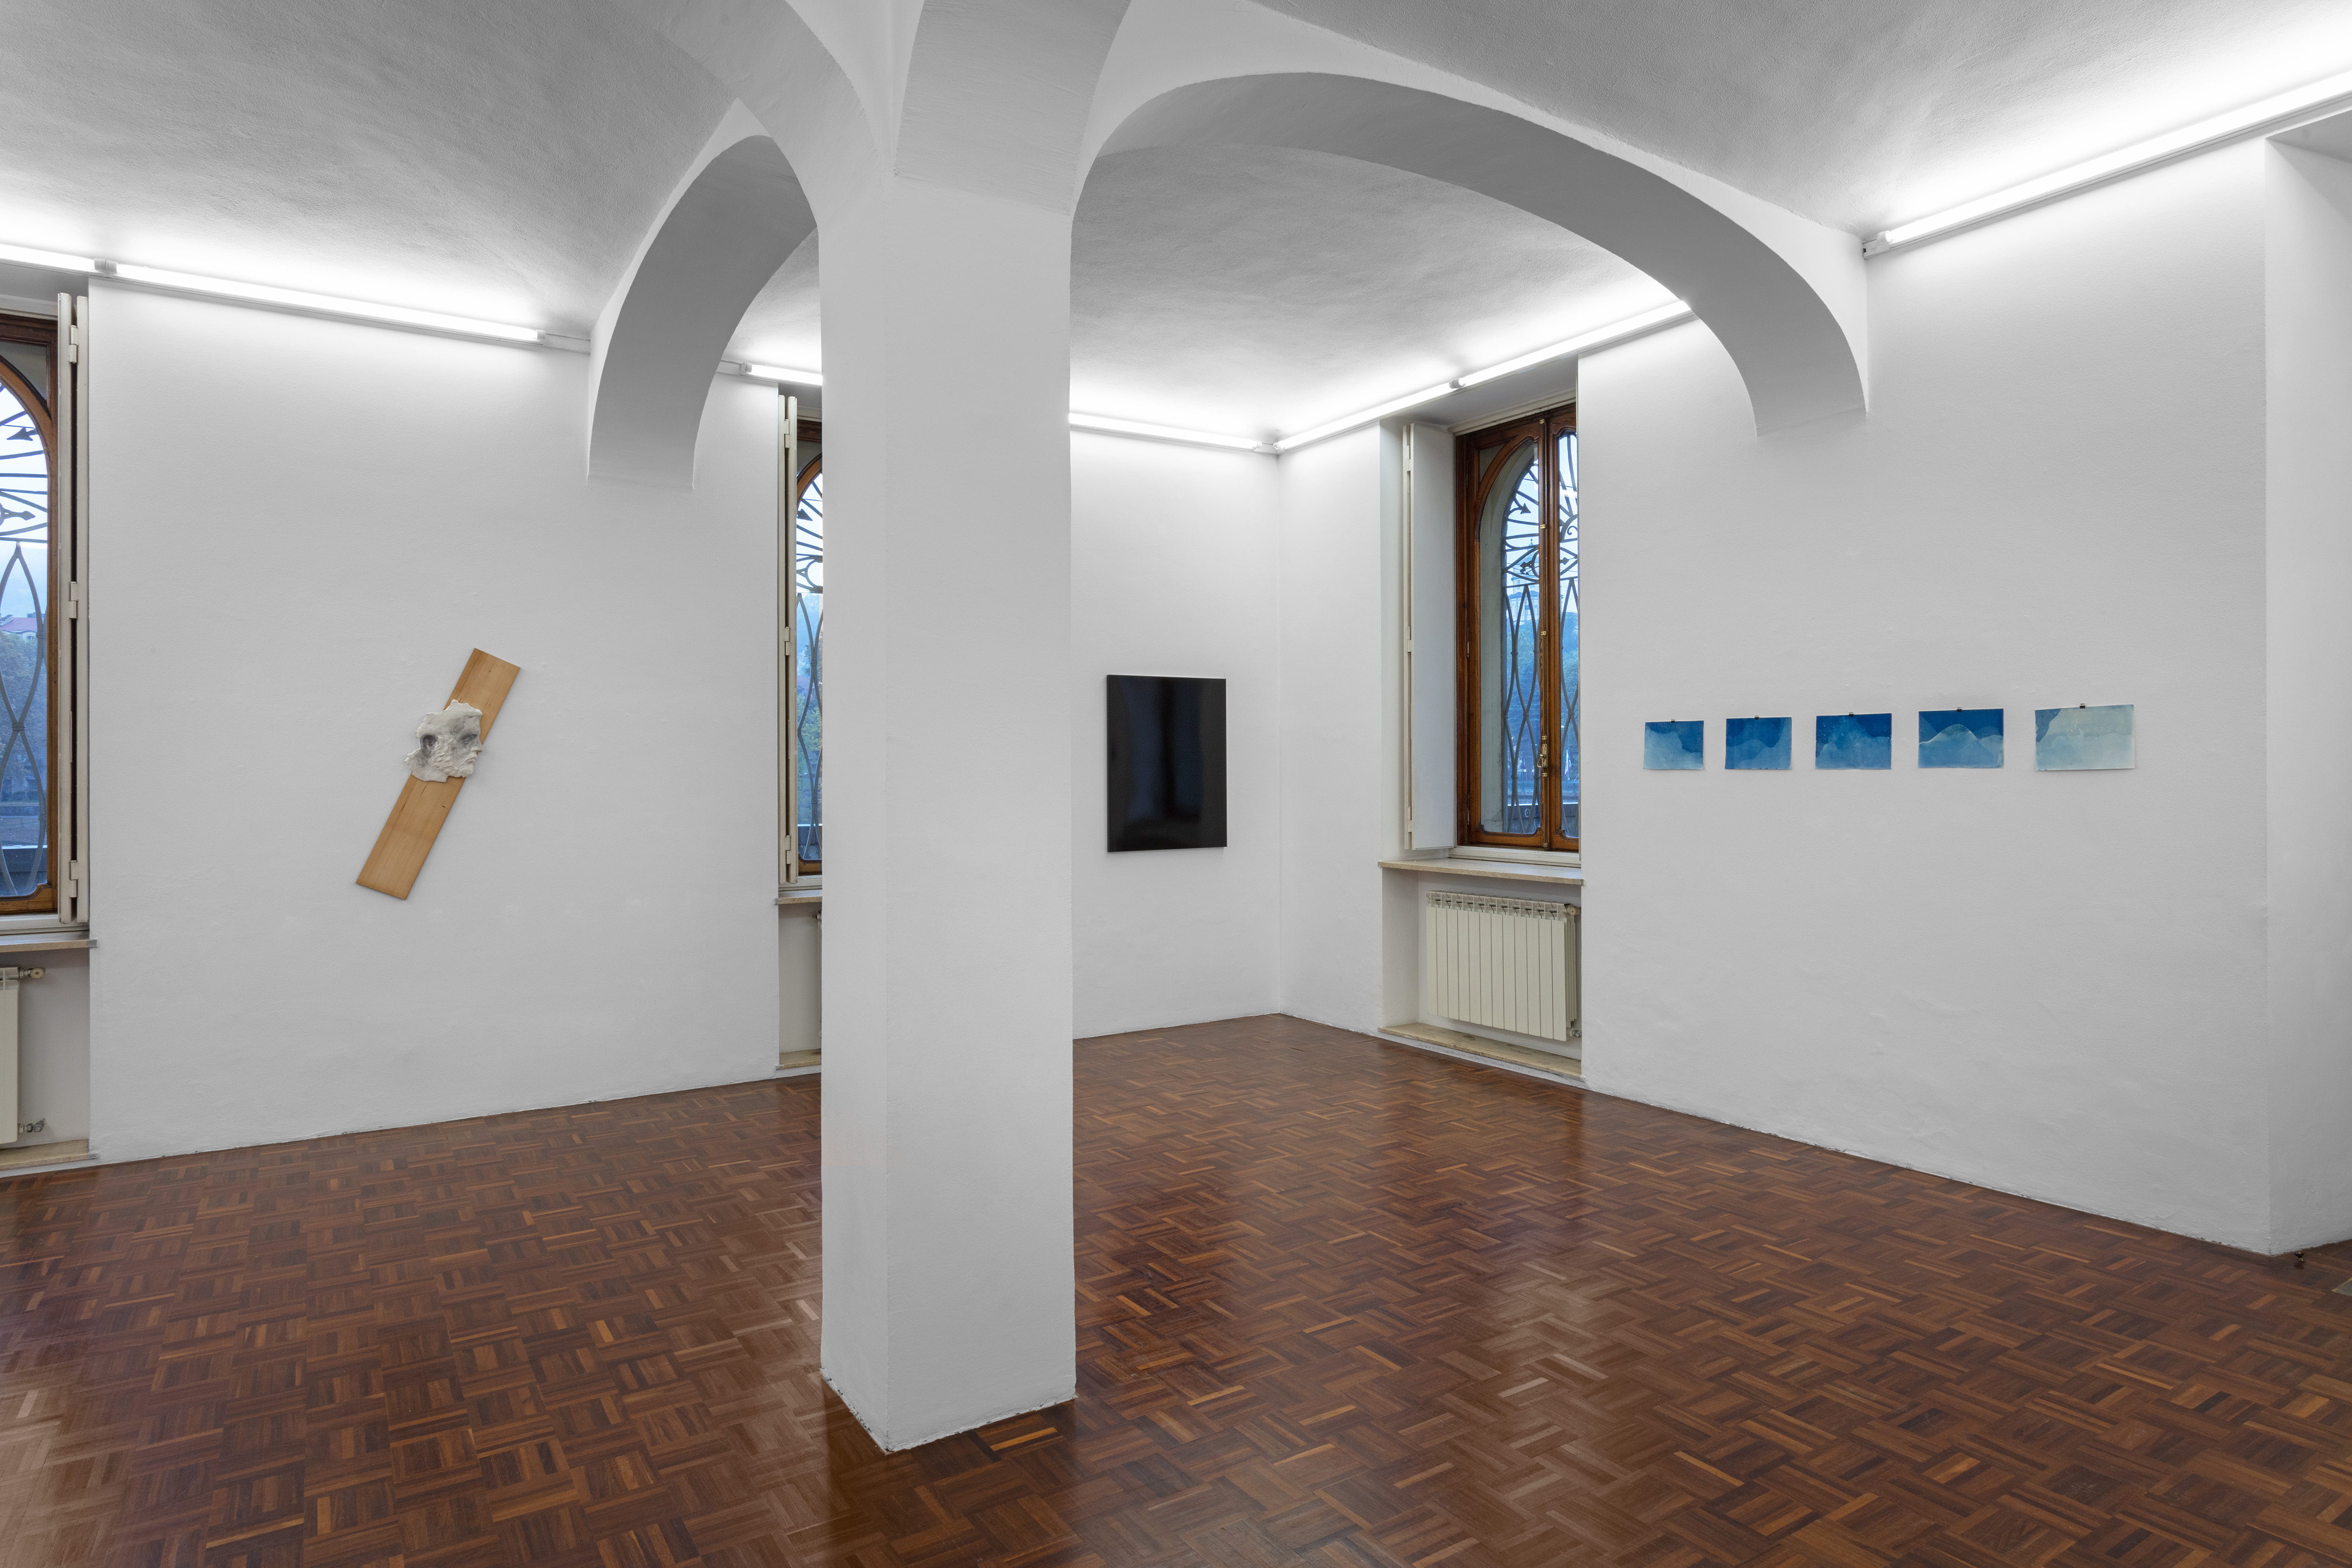 Installation view, Ghost track, Norma Mangione Gallery, photo credit: Sebastiano Pellion di Persano, courtesy Image of Norma Mangione Gallery and the Artists